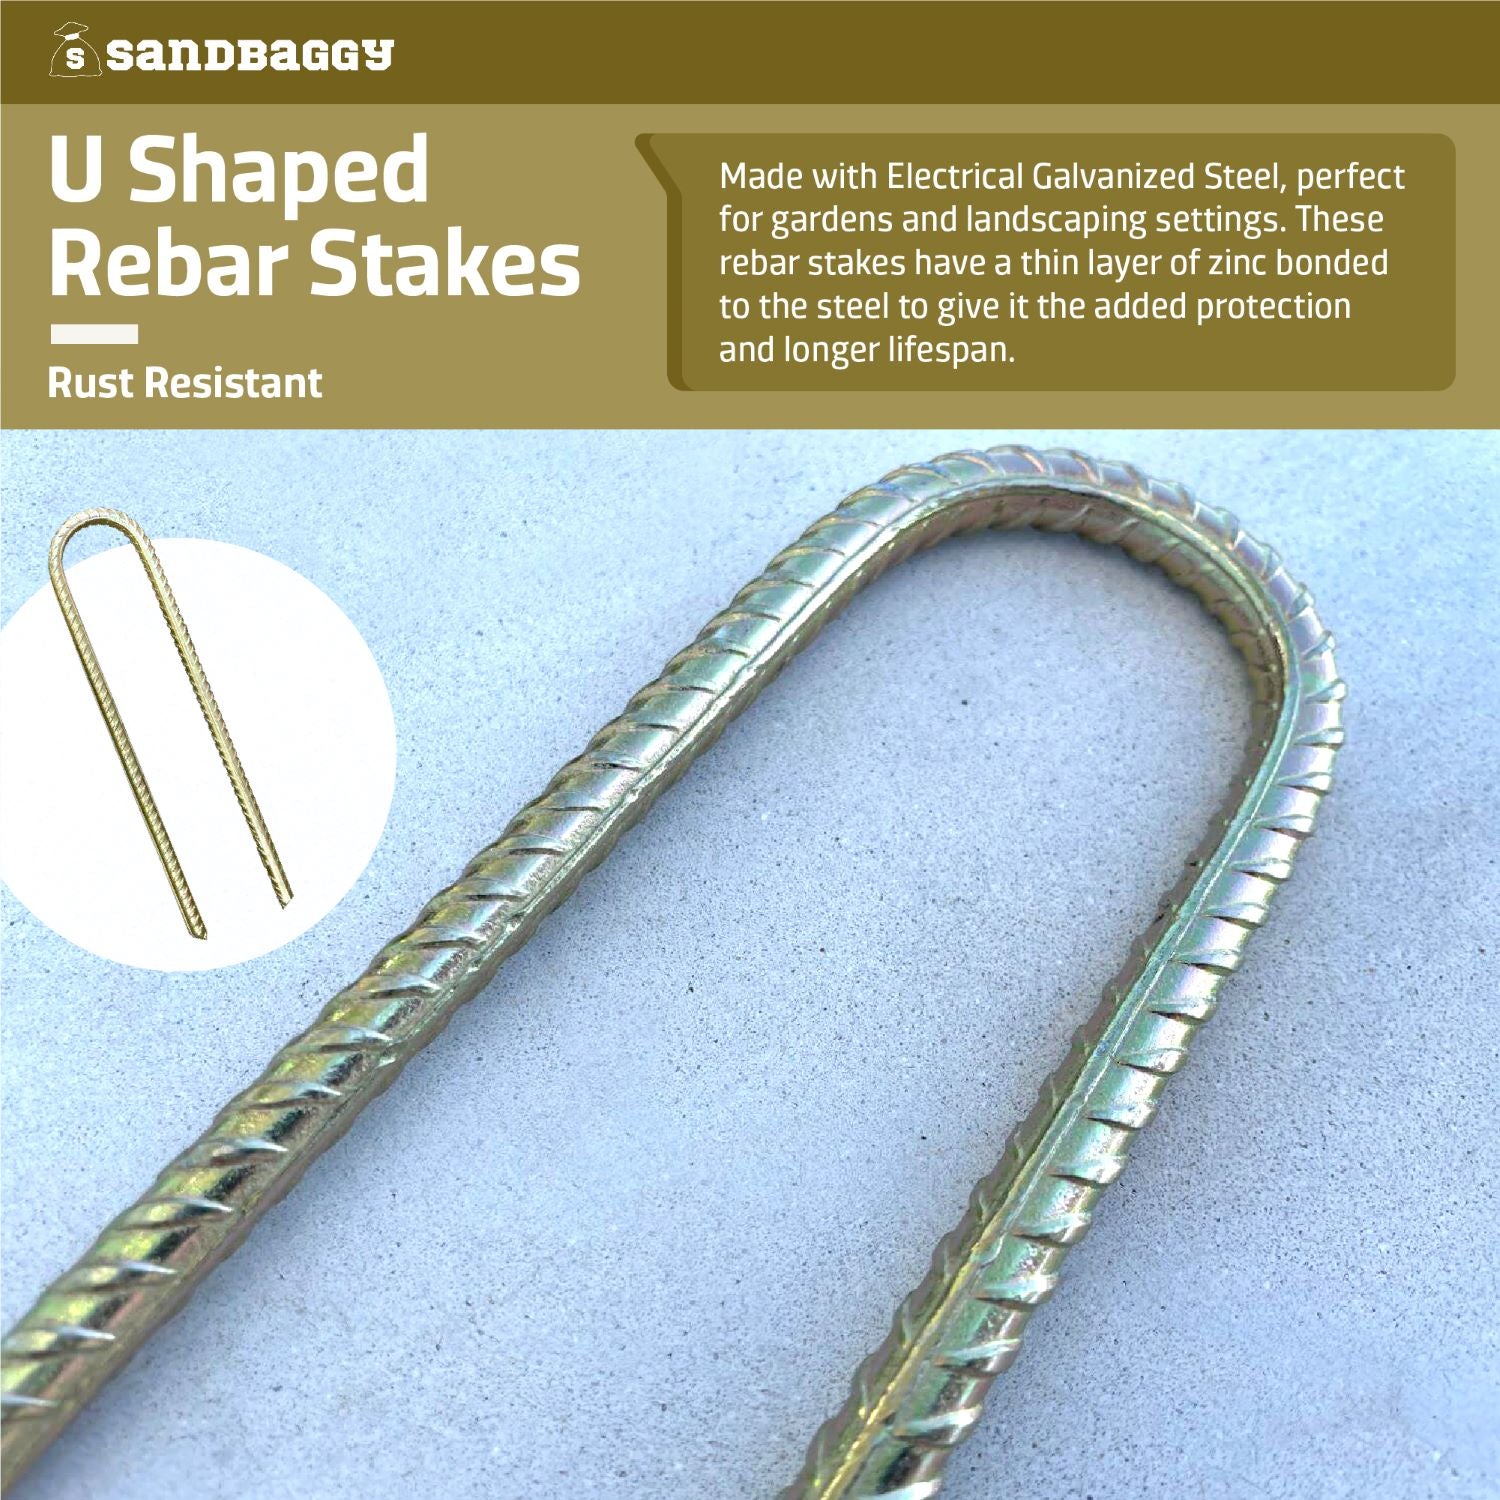 U Shaped Rebar Stakes - Galvanized Steel #3 Rebar- Sandbaggy